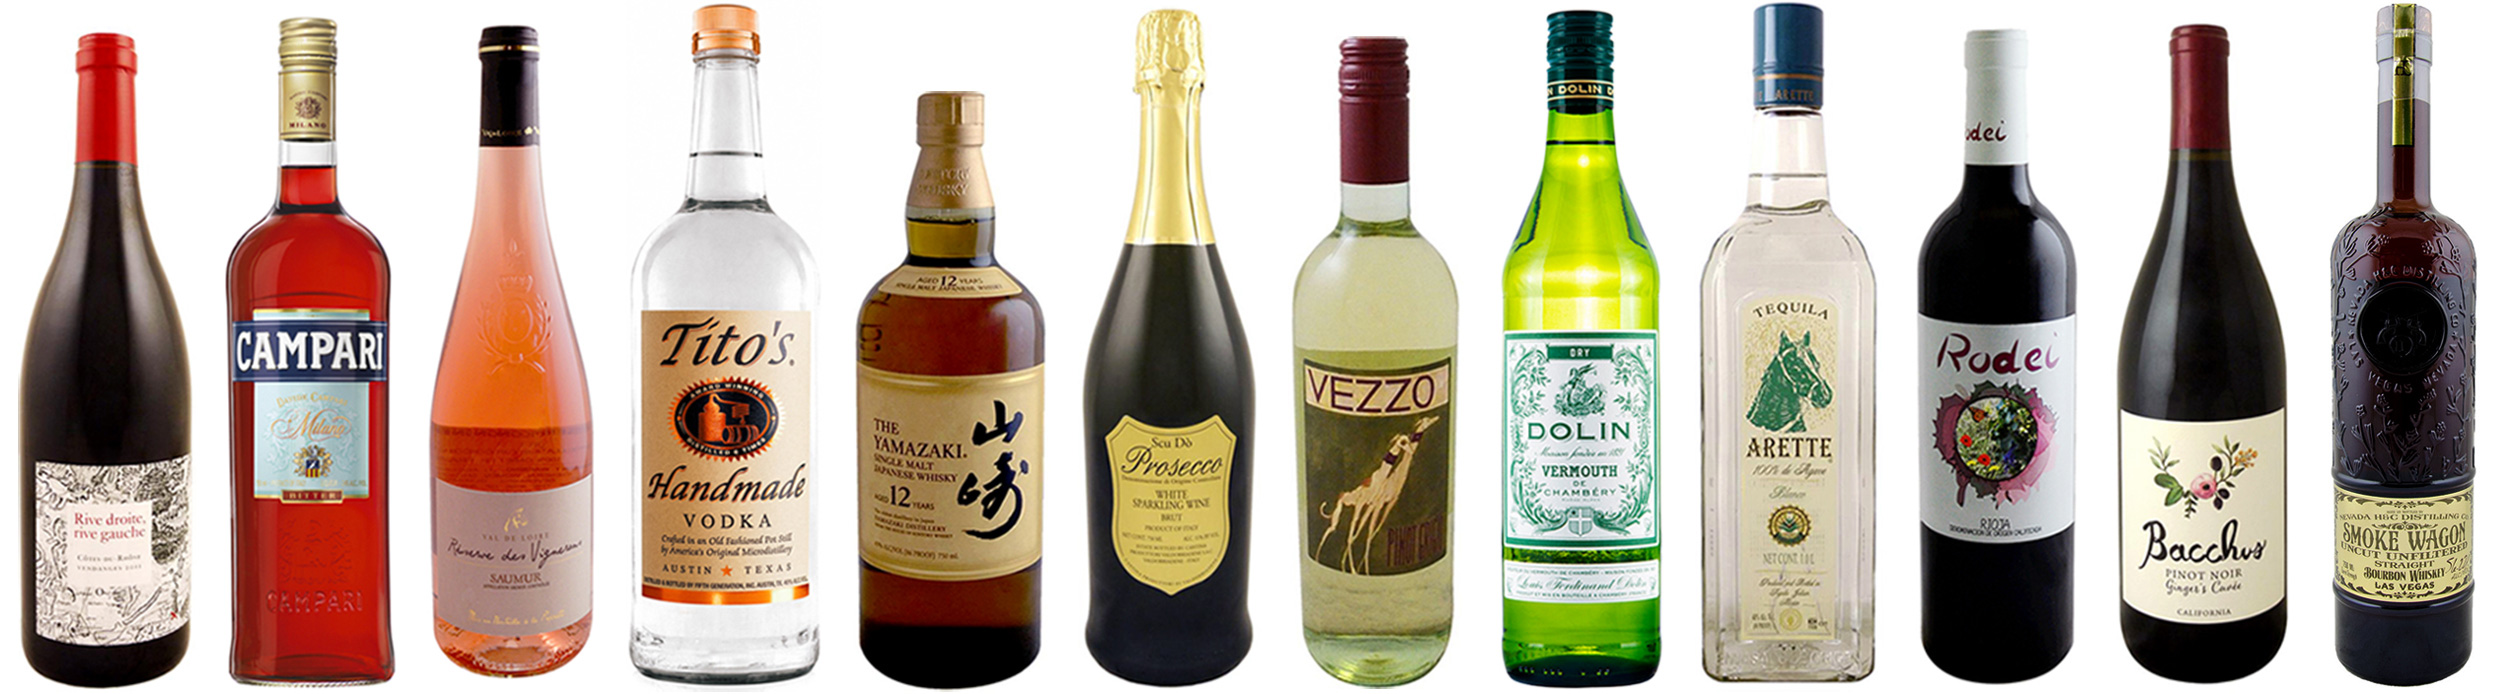 Wine & spirits bottles